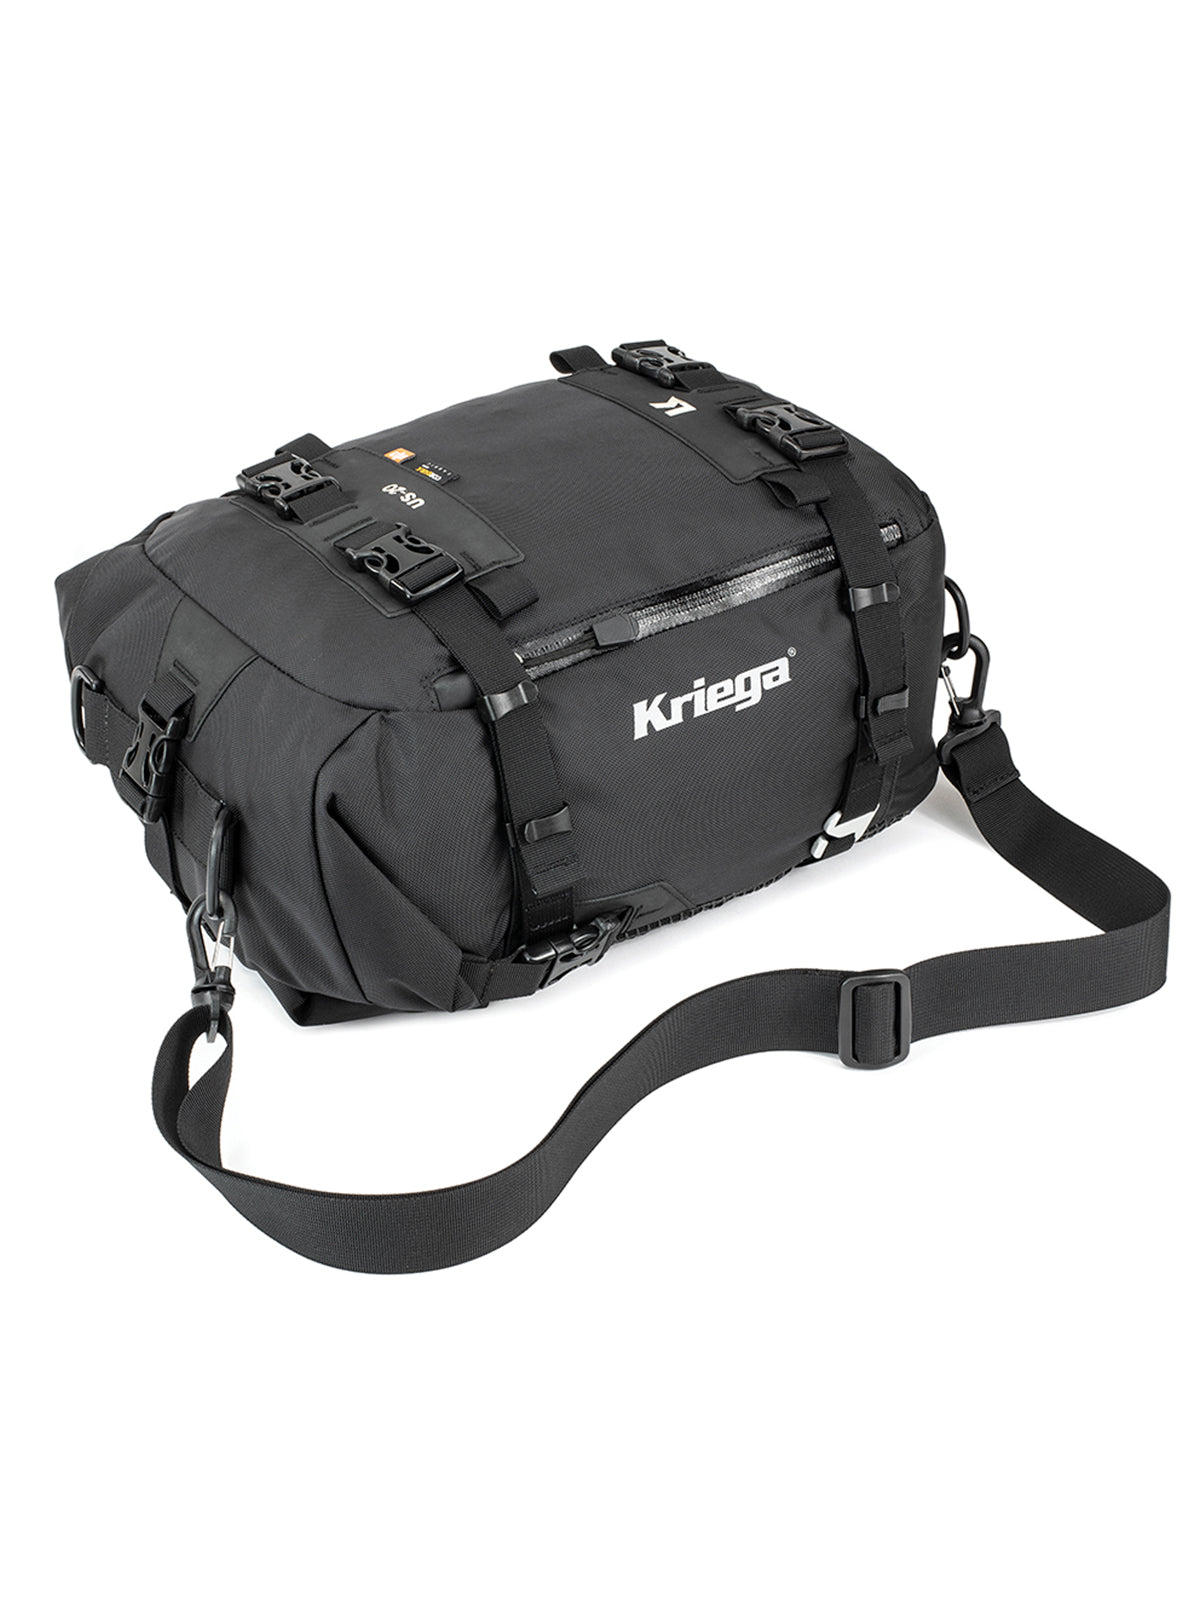 Kriega US20 Drypack with strap